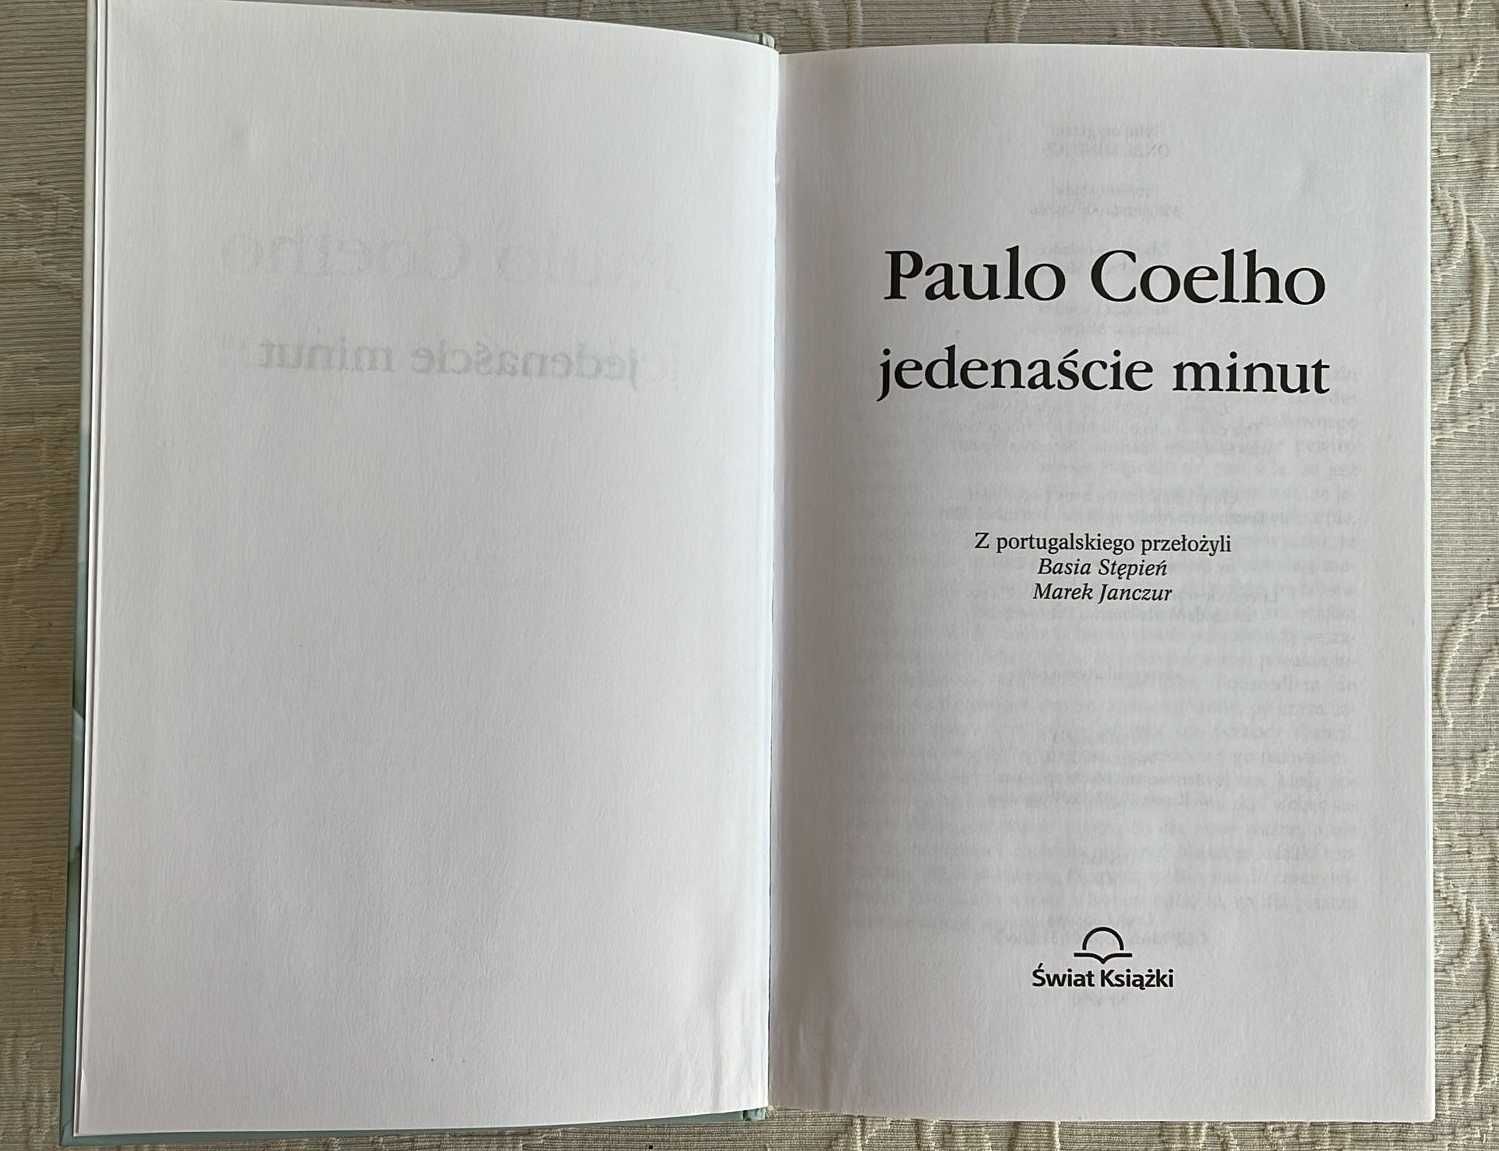 Jedenaście minut Paulo Coelho